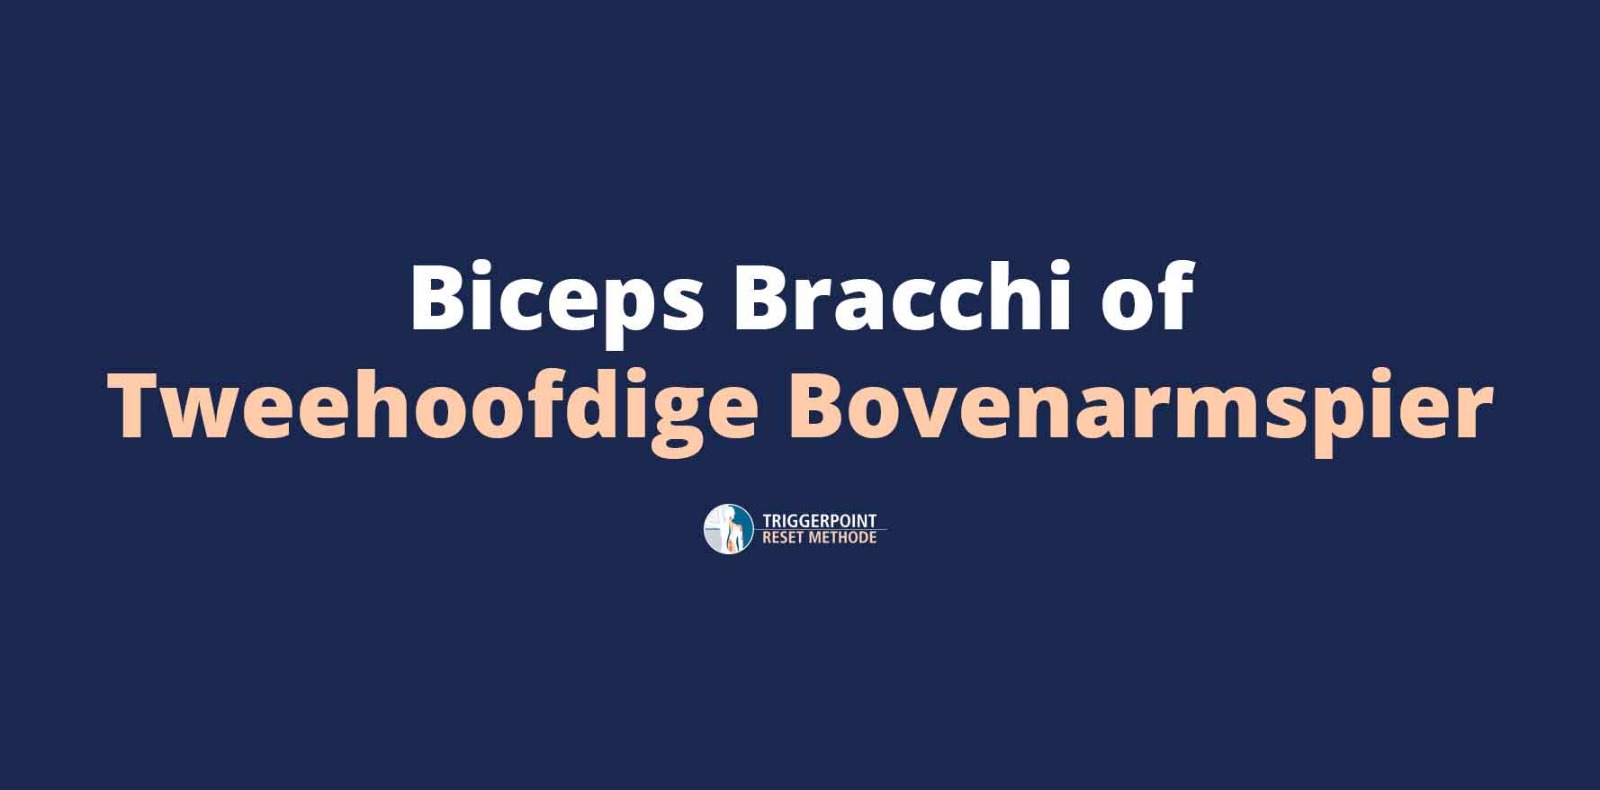 Biceps brachii of Tweehoofdige Bovenarmspier